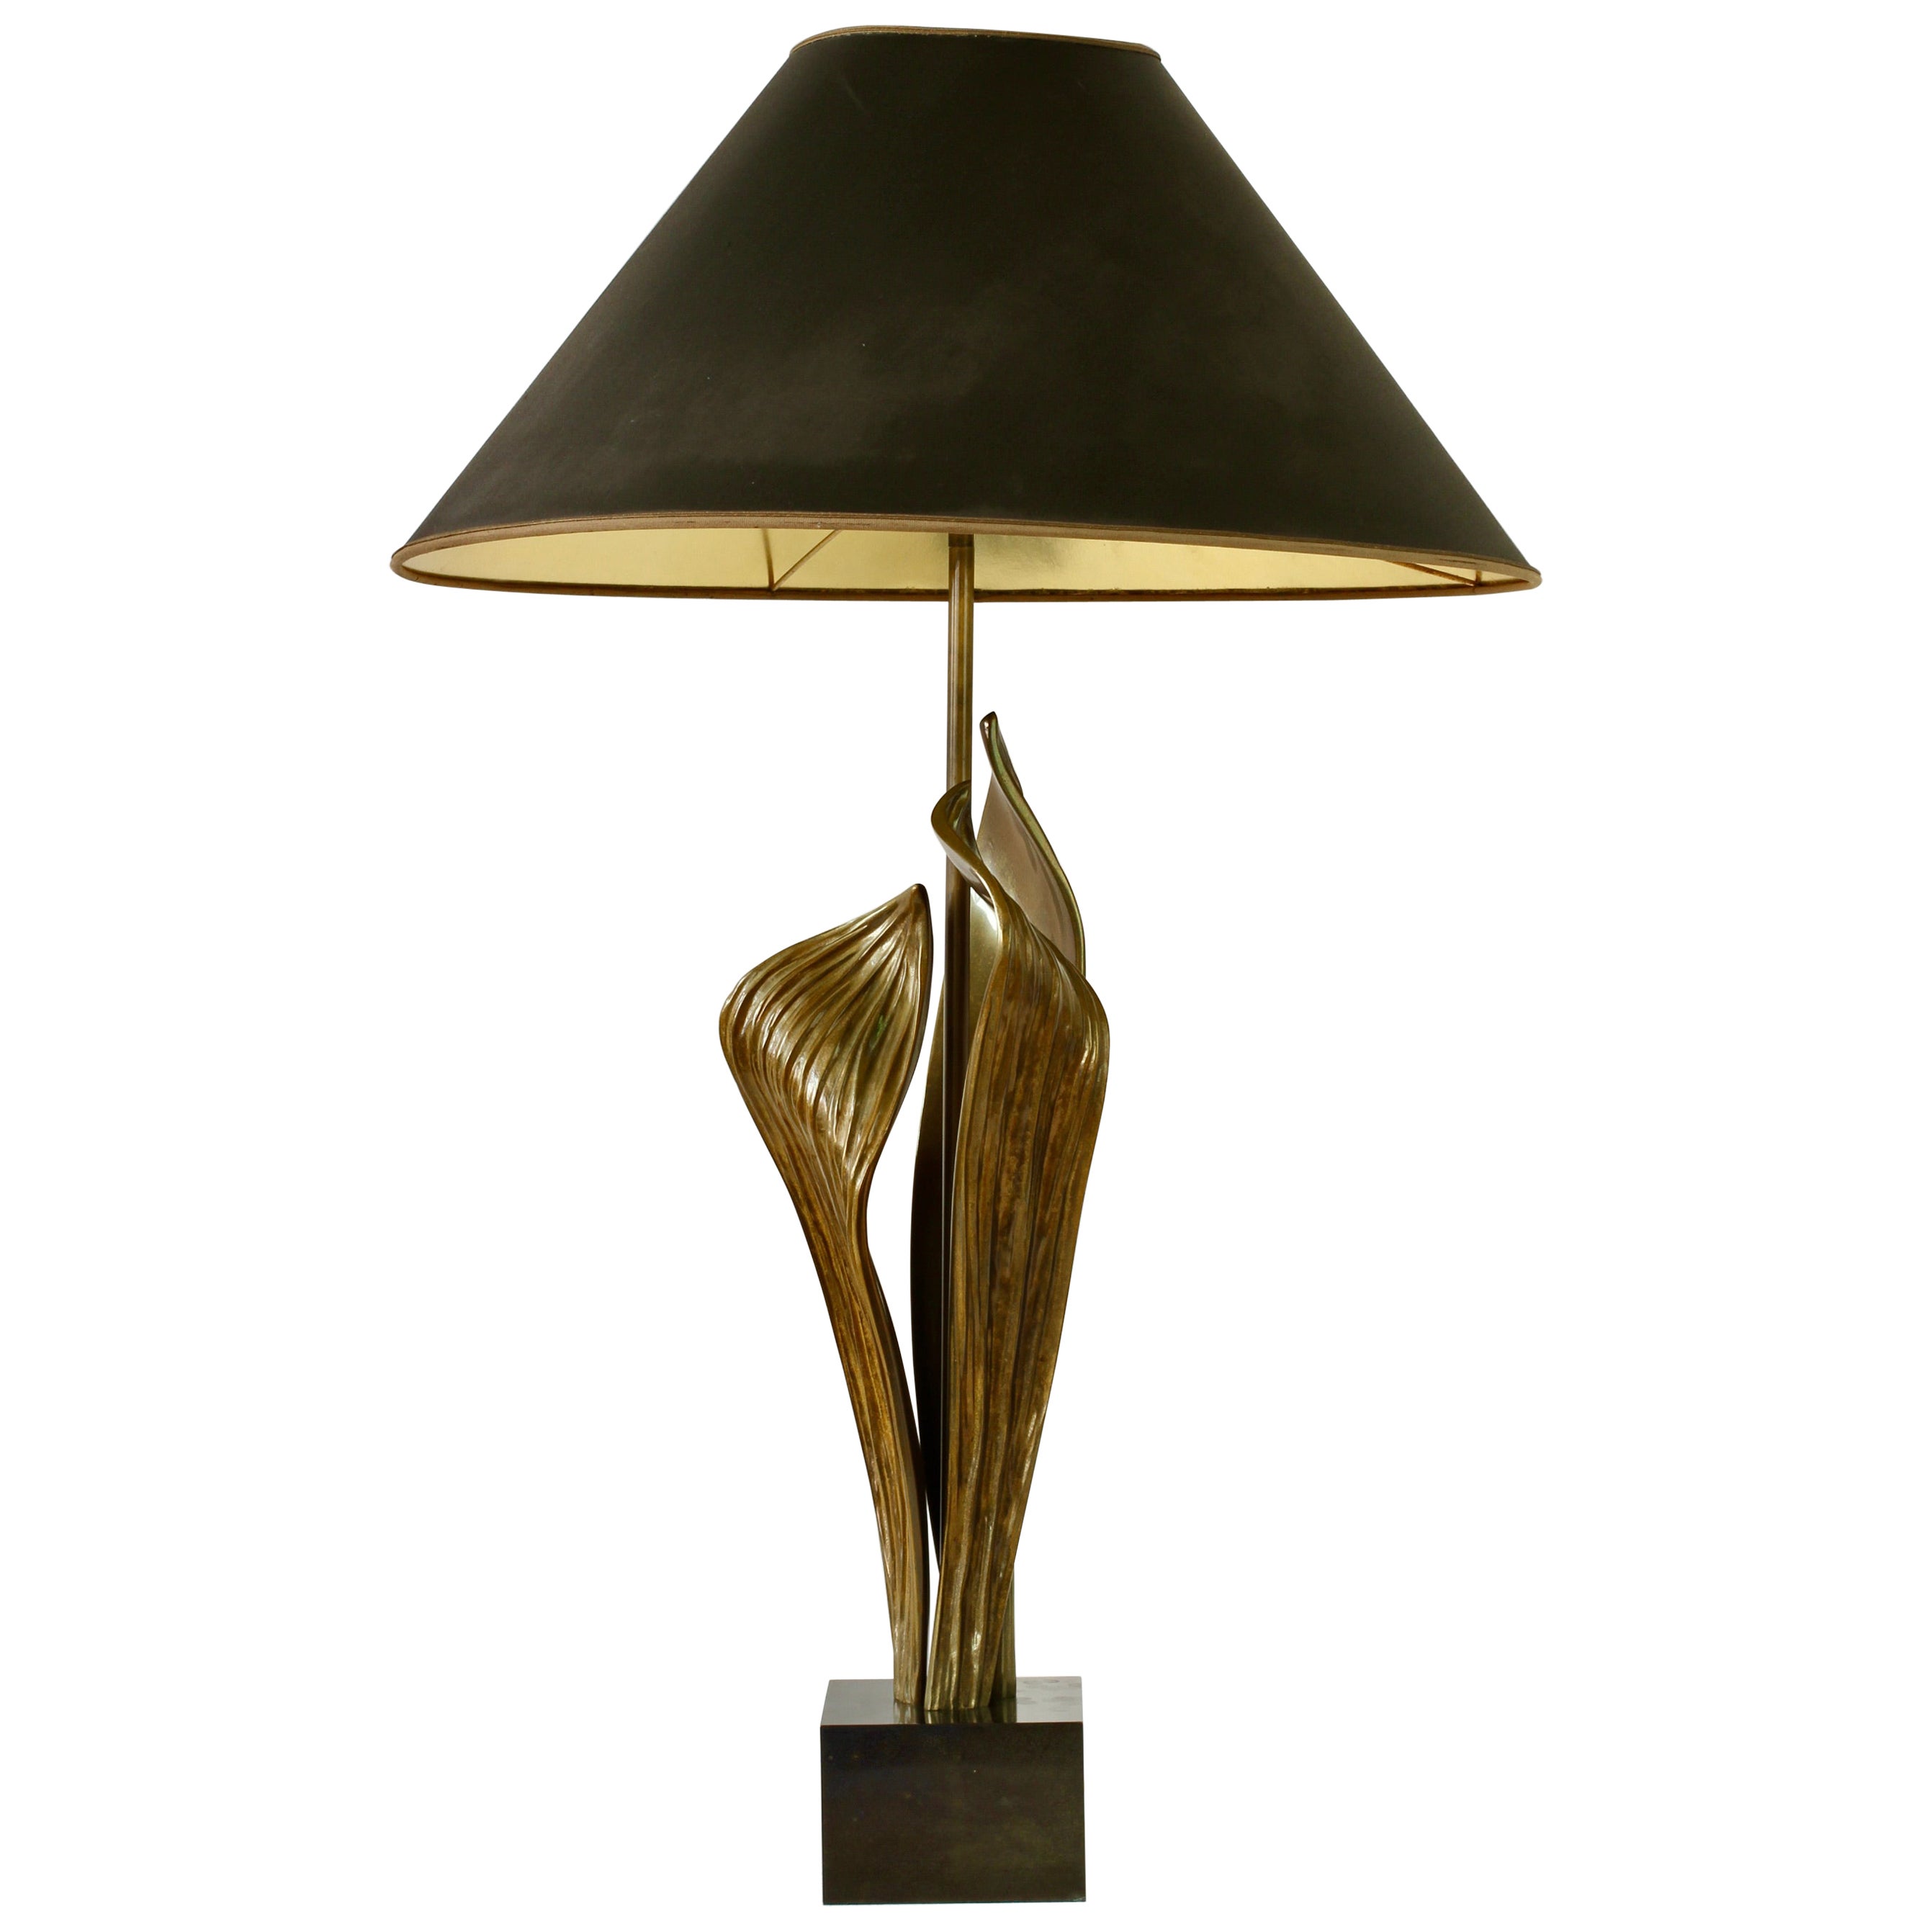 Chrystiane Charles / Maison Charles Early Signed #23 Amaryllis Brass Table Lamp